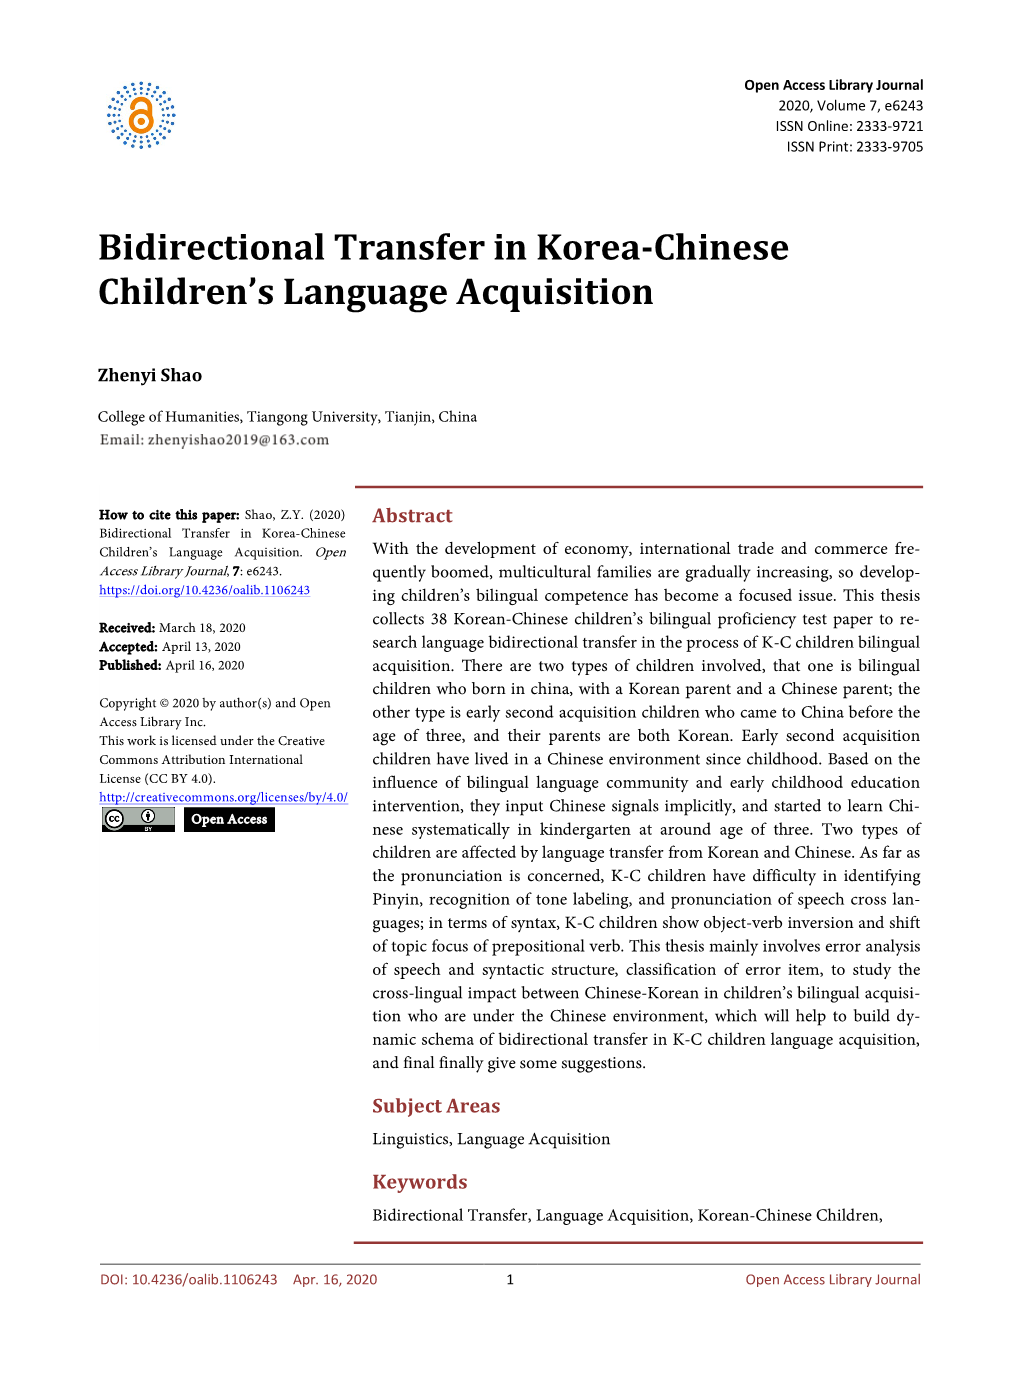 Bidirectional Transfer in Korea-Chinese Children's